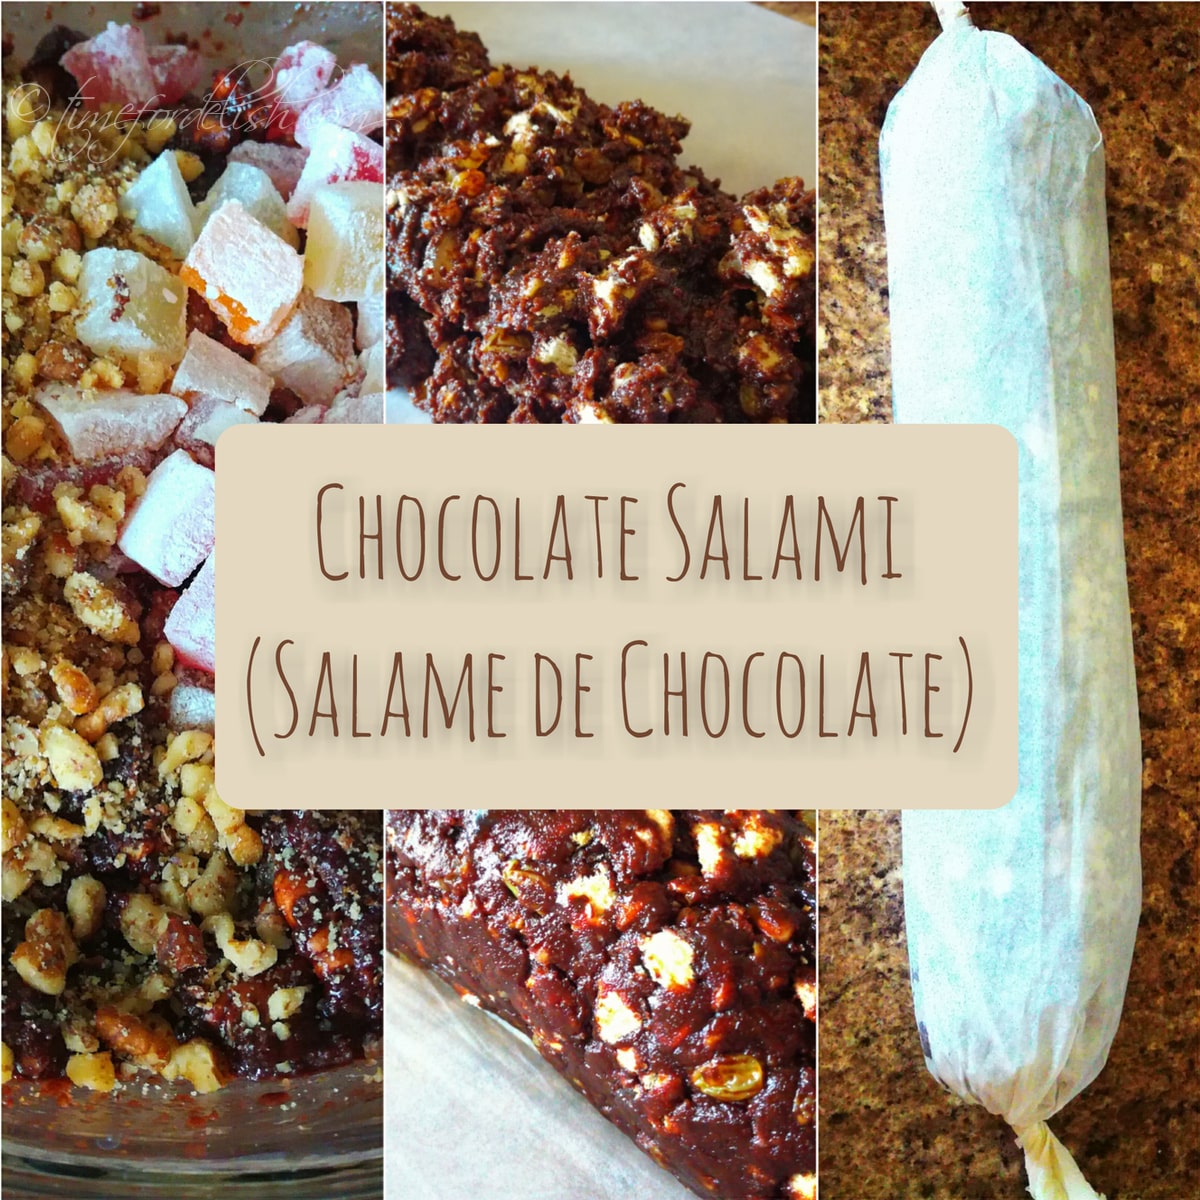 form the chocolate salami